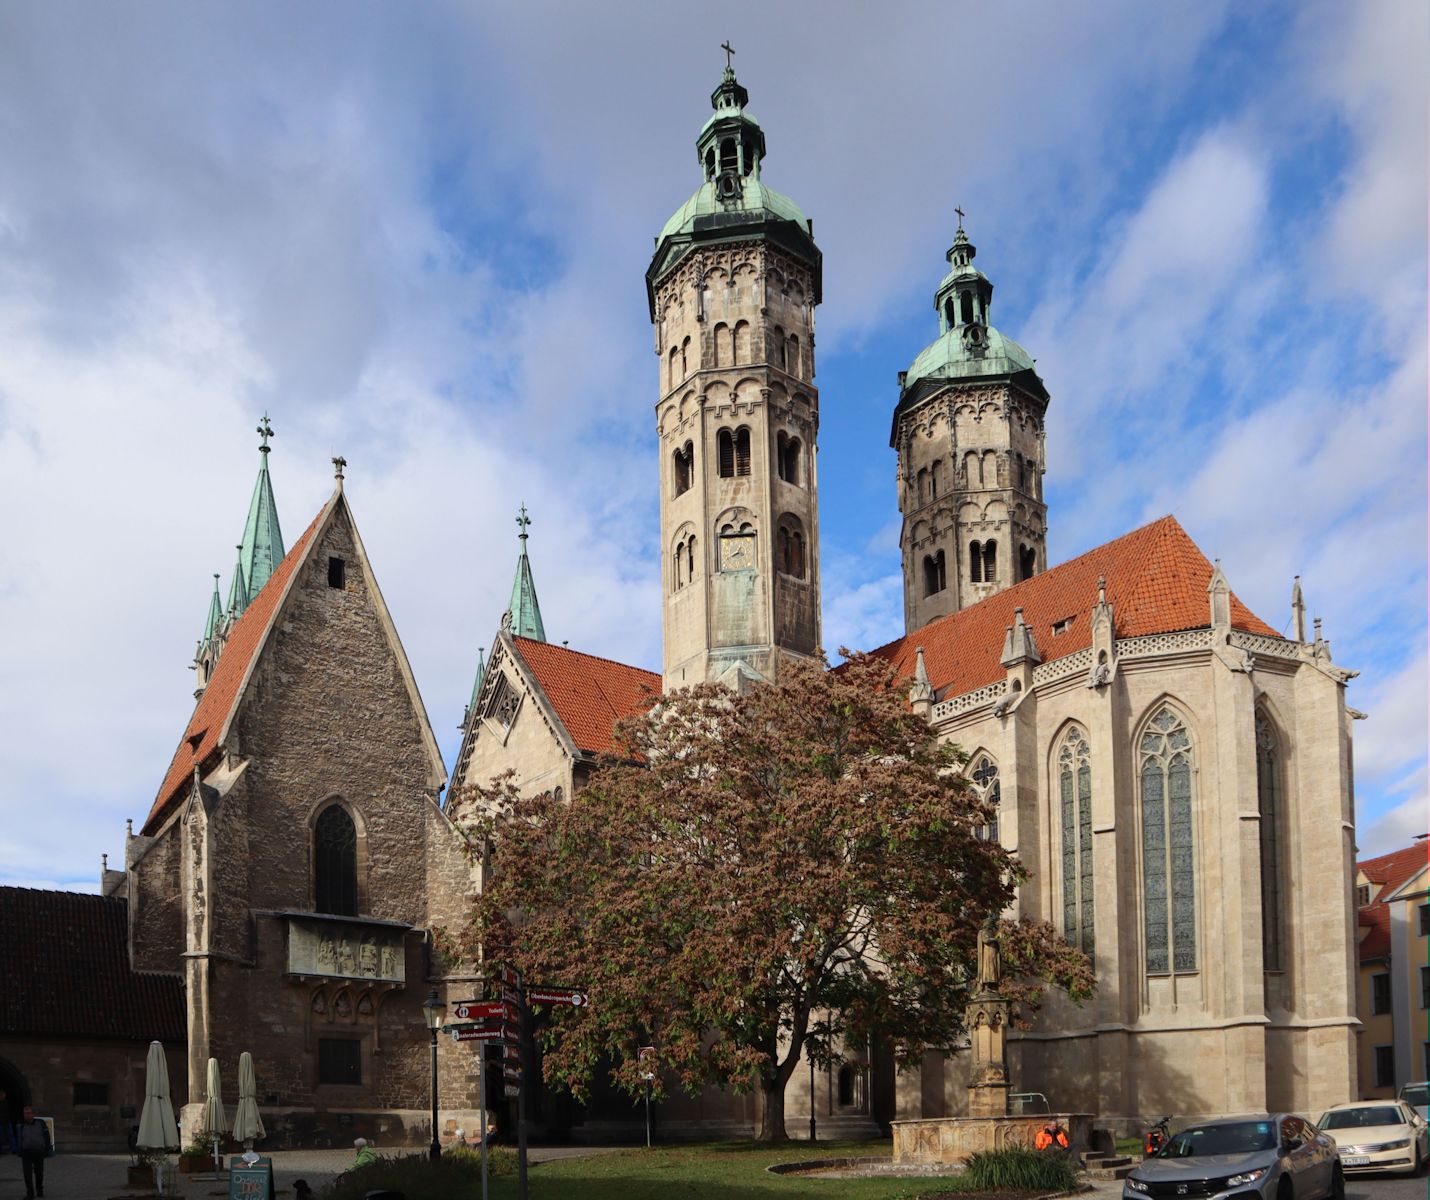 Dom in Naumburg mit angeschlossener Marienkirche (links)